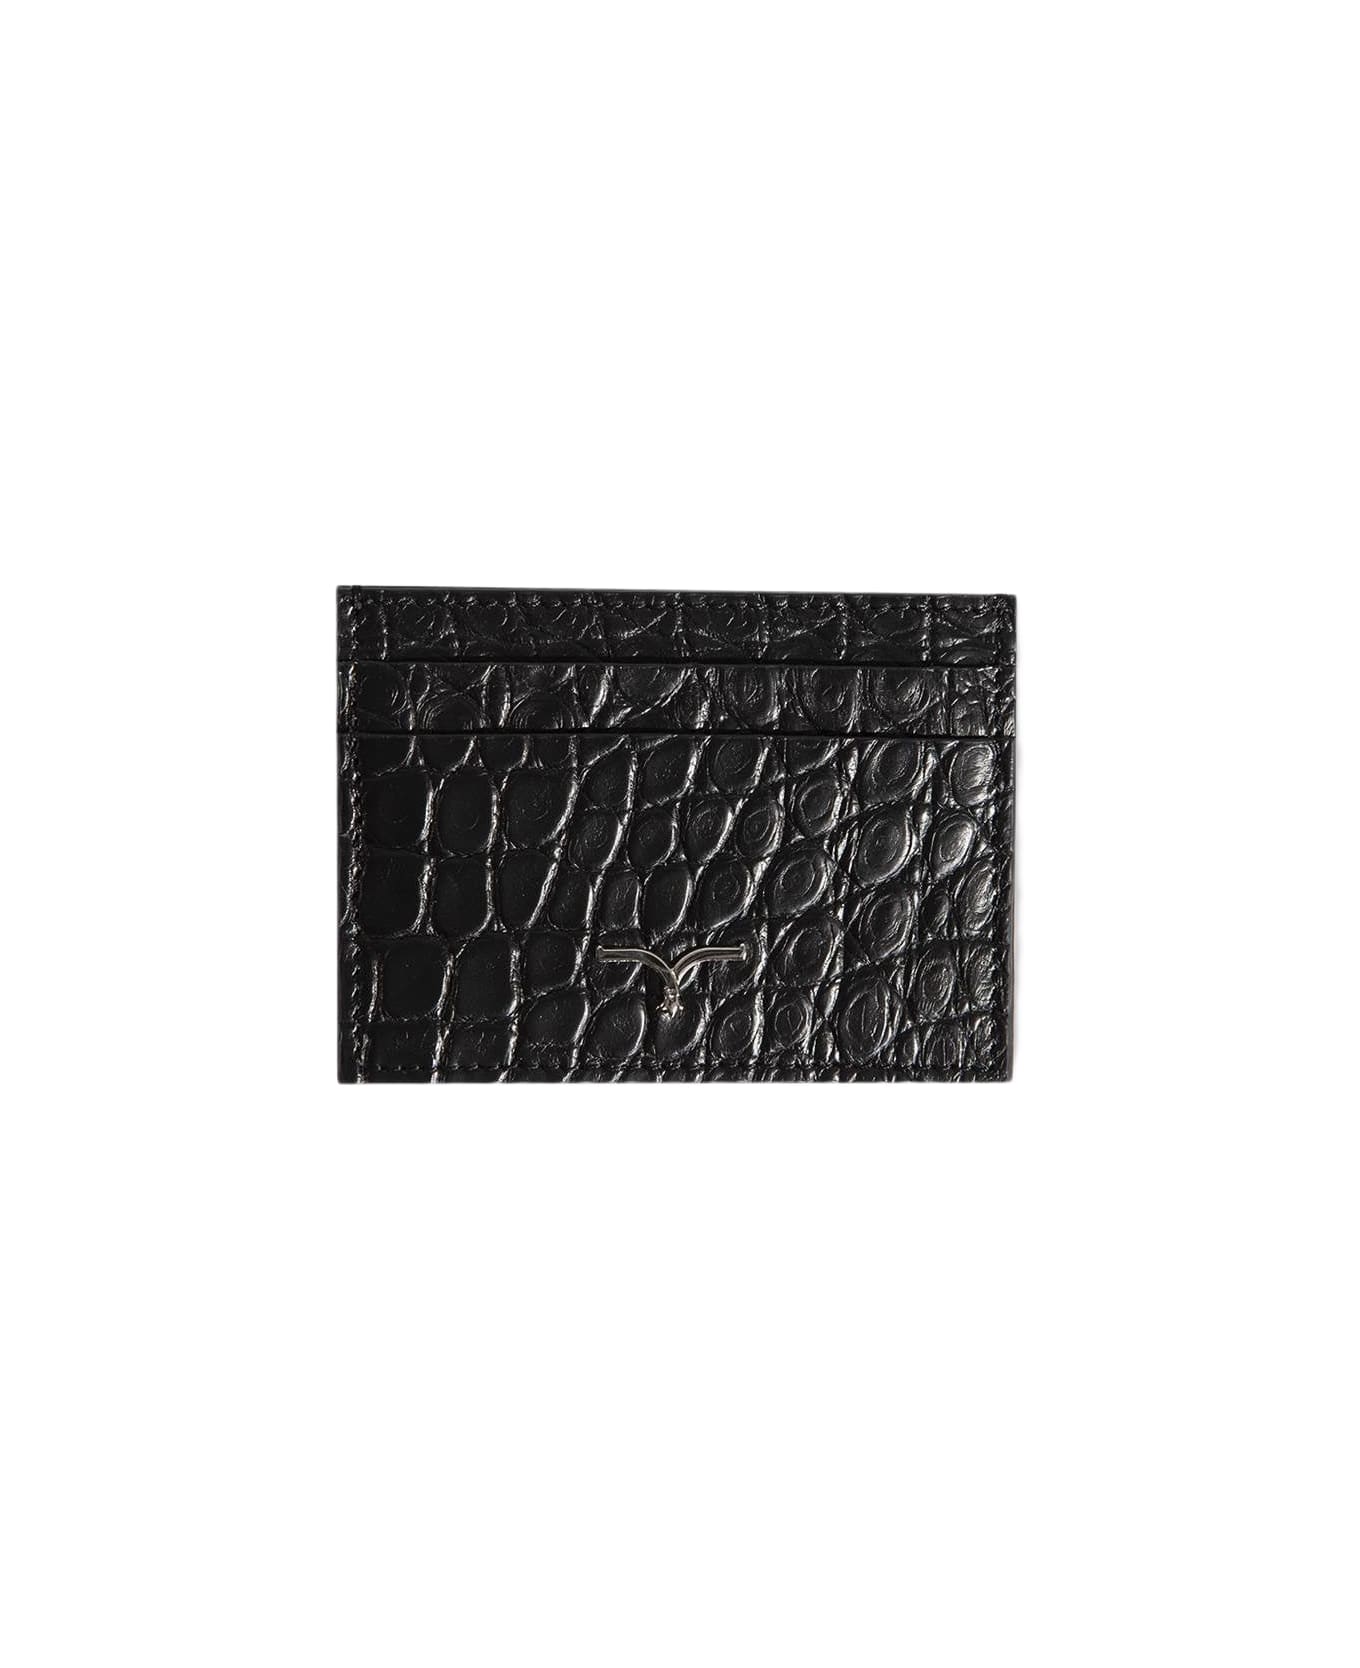 Larusmiani Card Holder Wallet - Black 財布